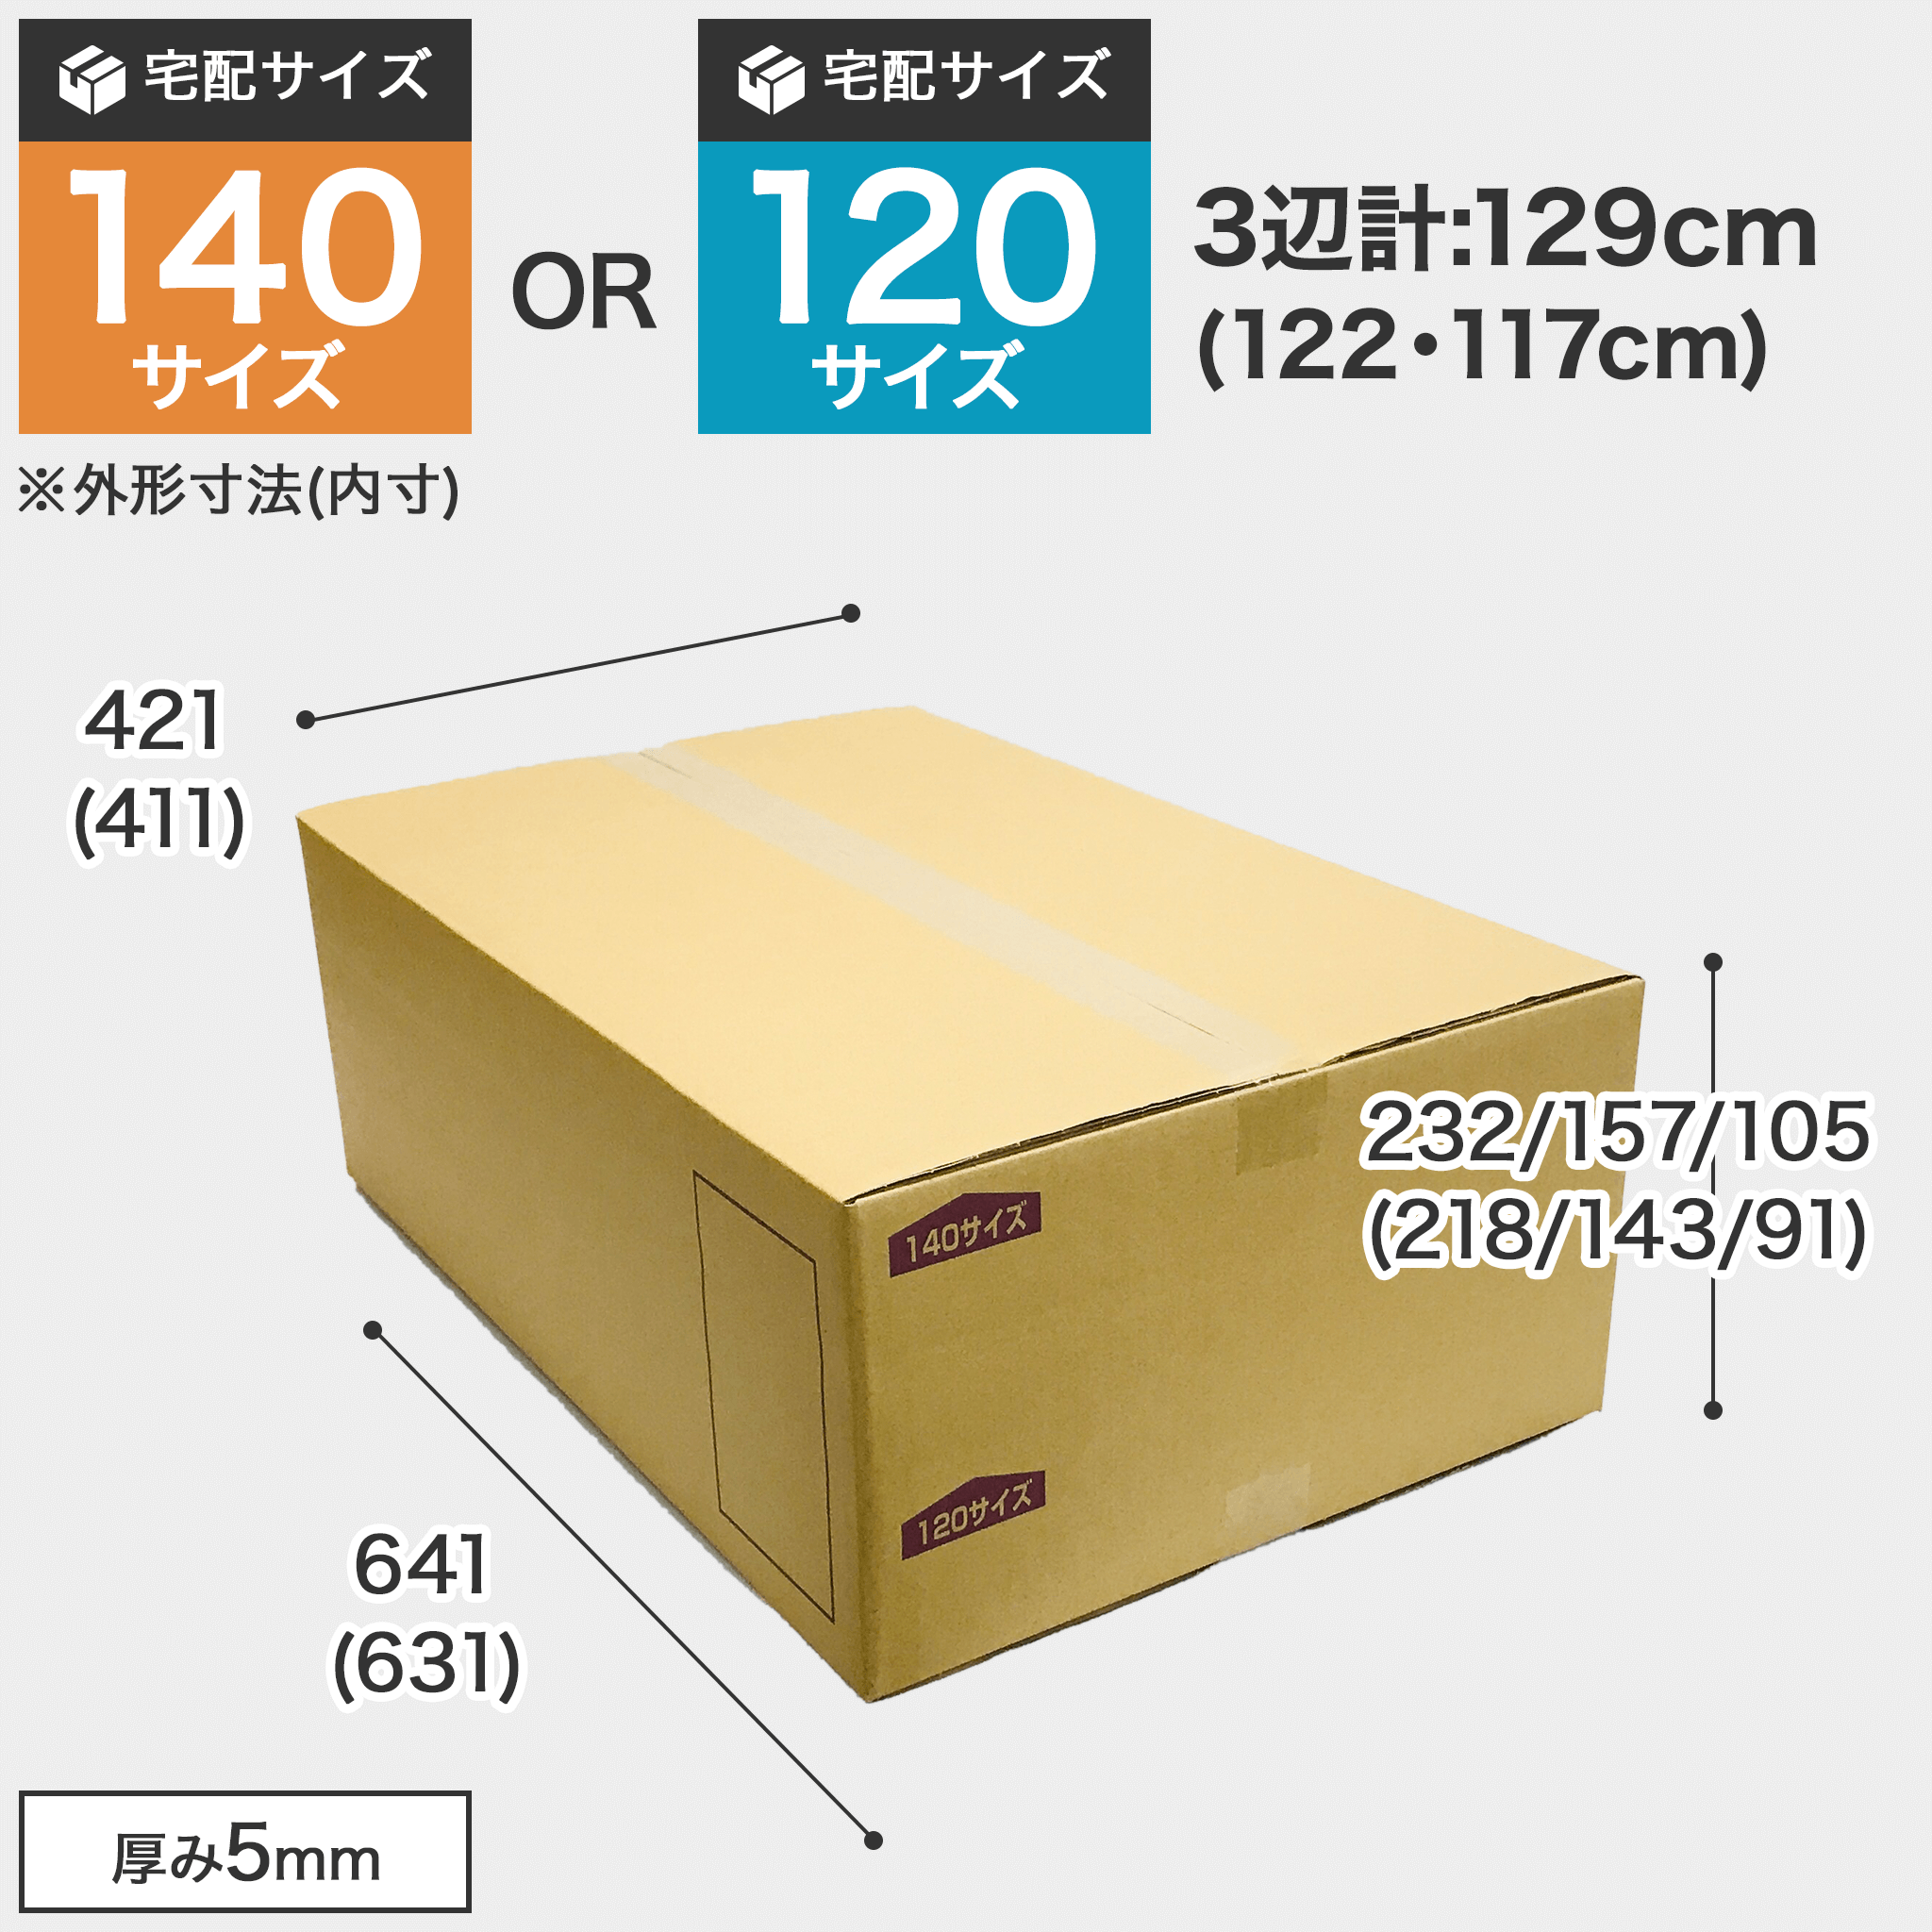 BOX-081【送料込】ダンボール箱 140/120サイズ T-4 【高さ調整箱】